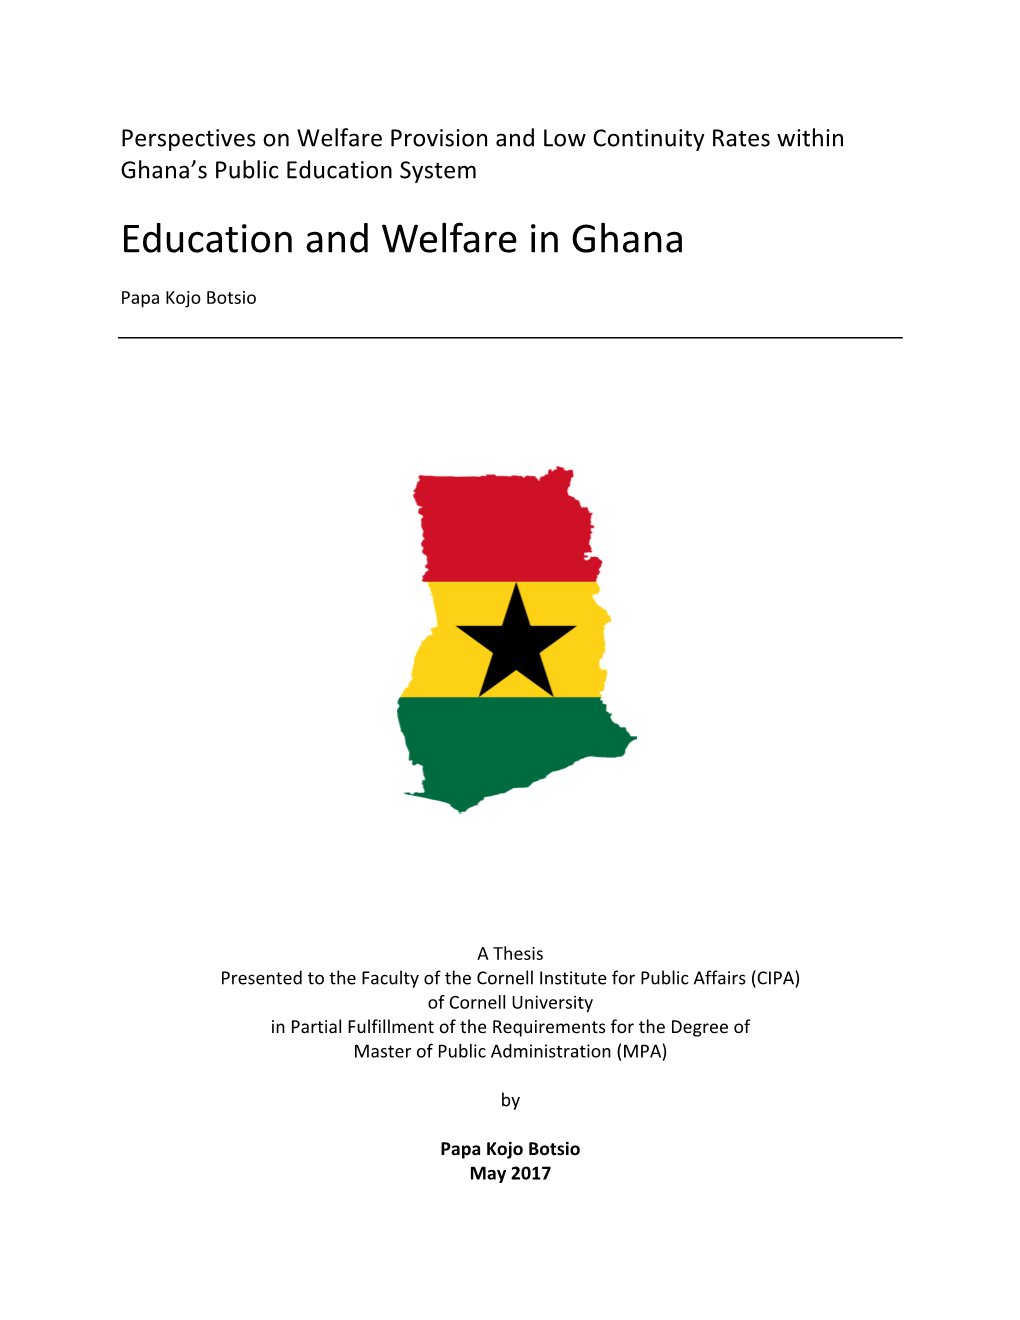 Education and Welfare in Ghana